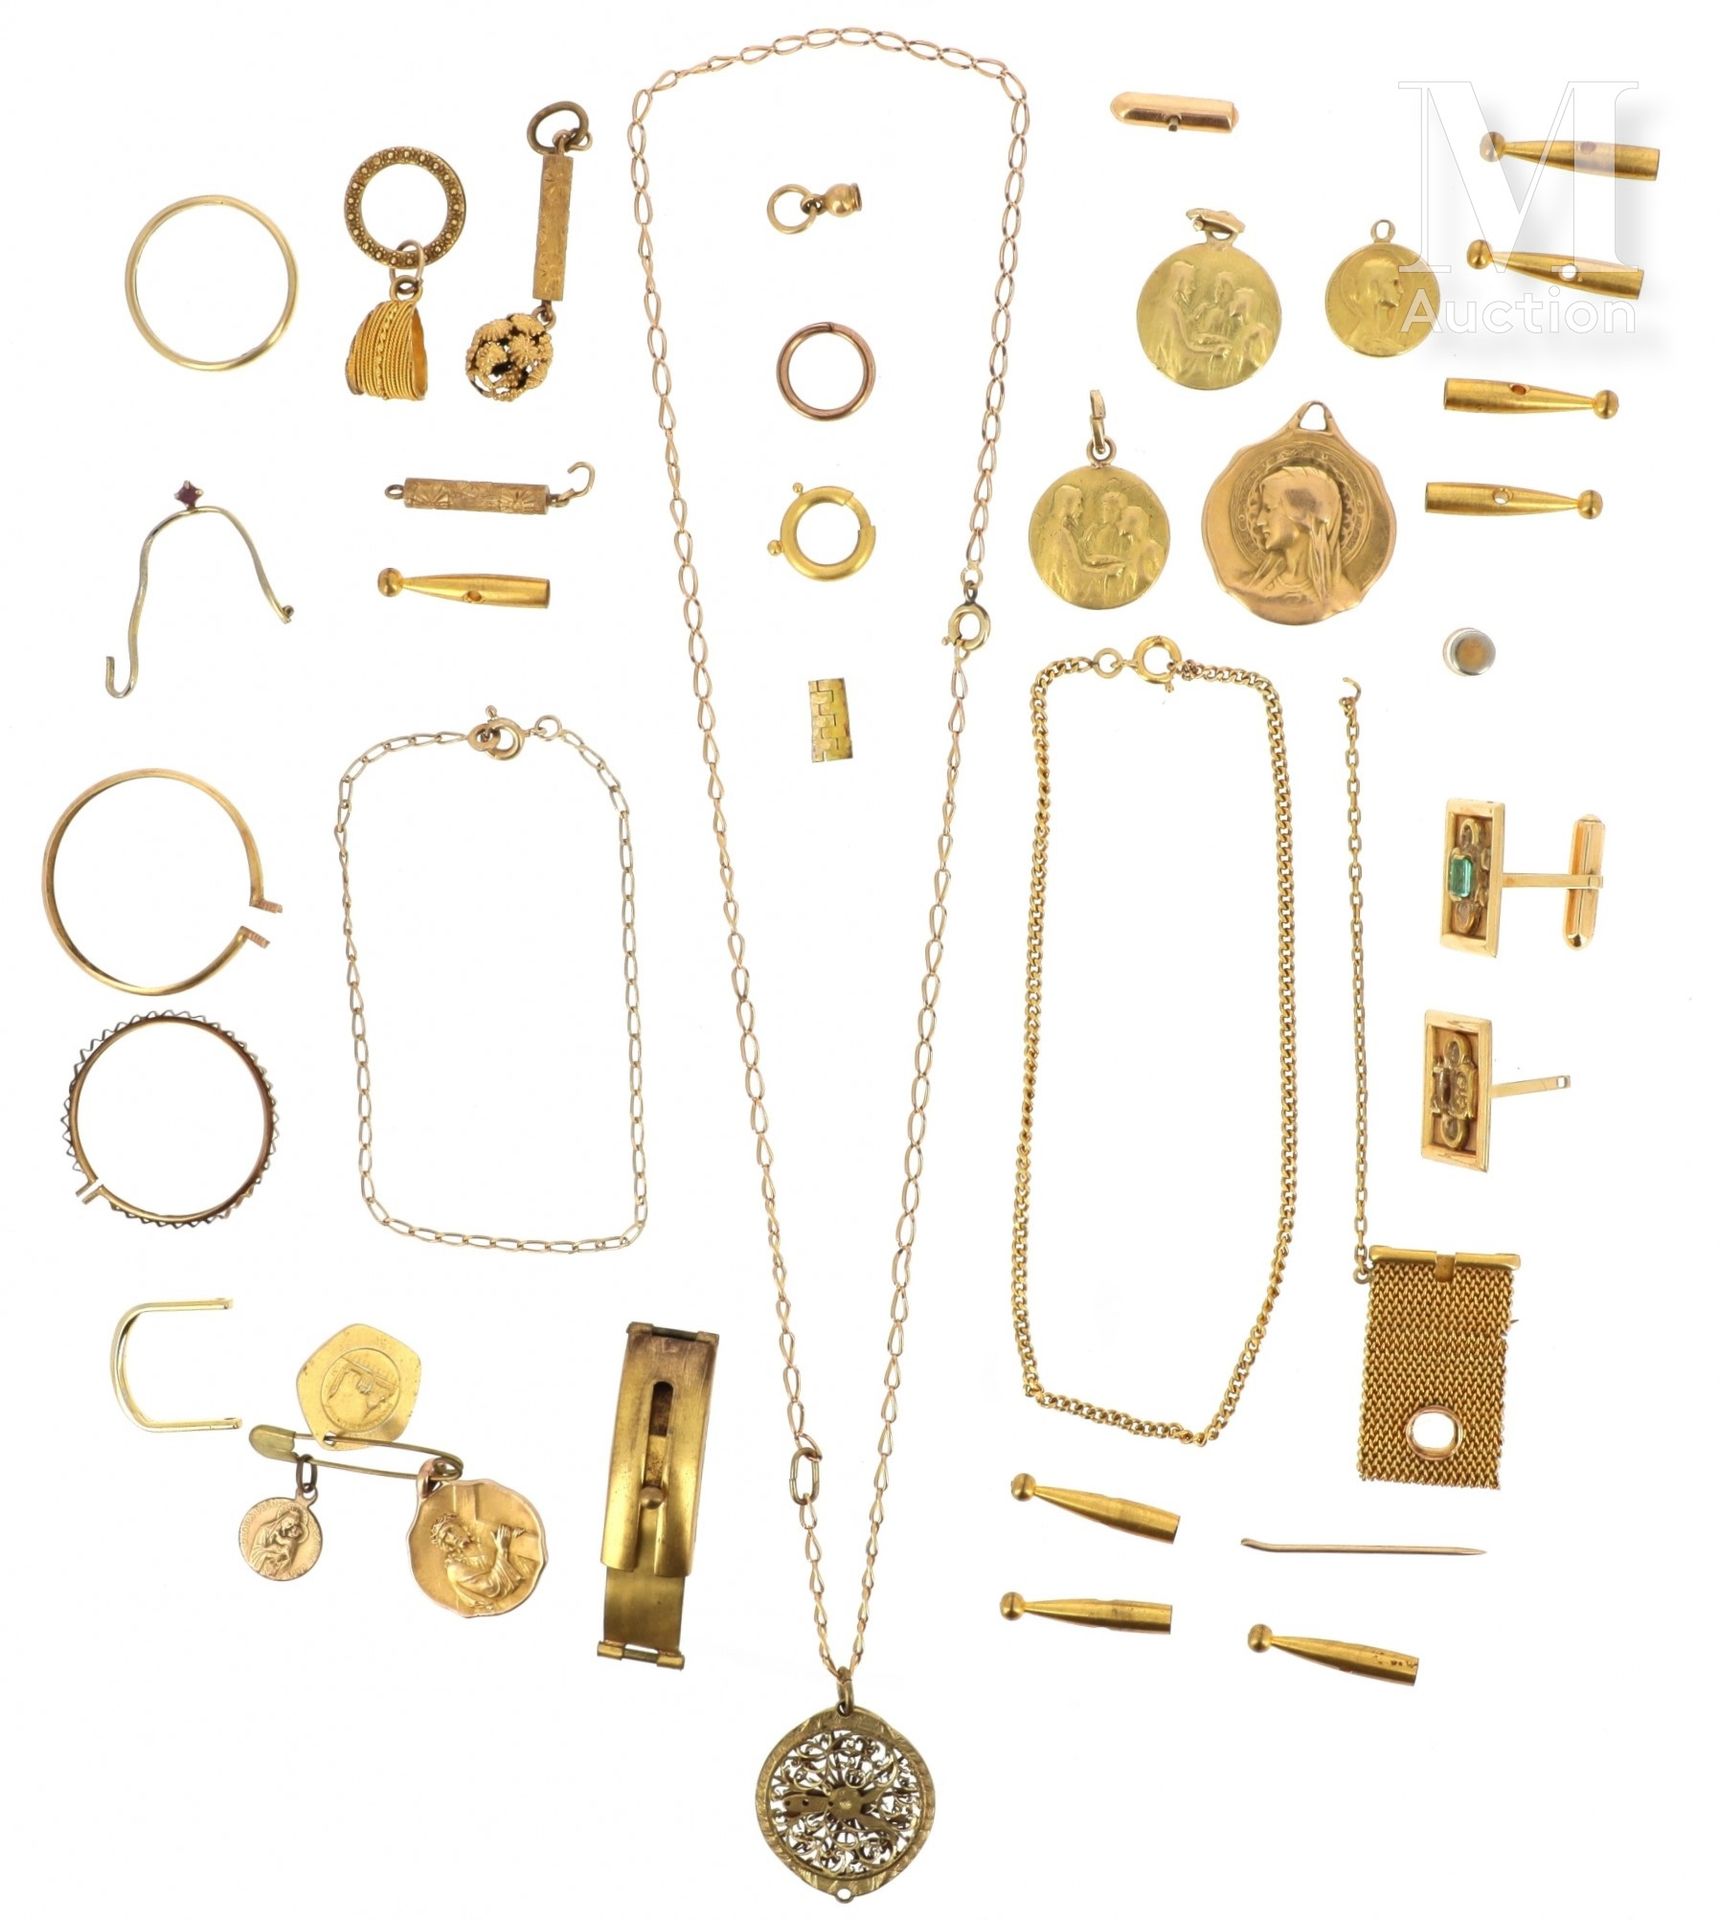 Lot de bijoux et débris 一批18K(750°/°)黄金的杂项首饰和废料，包括:

袖扣、部分表带、各种奖章、结婚戒指、扣子和碎片。

总&hellip;